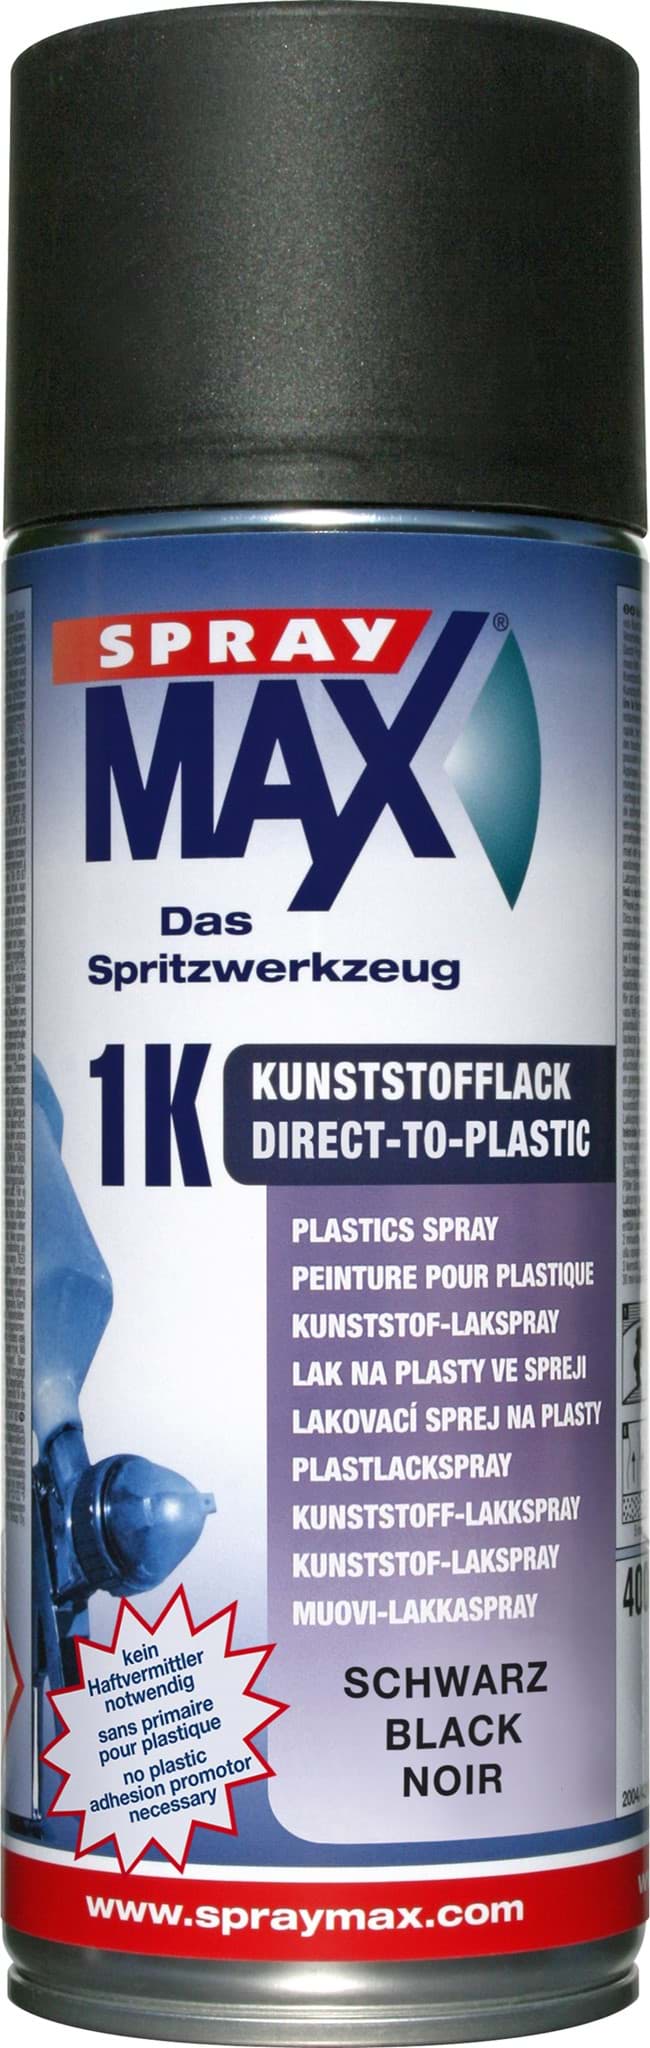 SprayMax 1K DTP-Kunststofflack Schwarz 400ml 680046 resmi